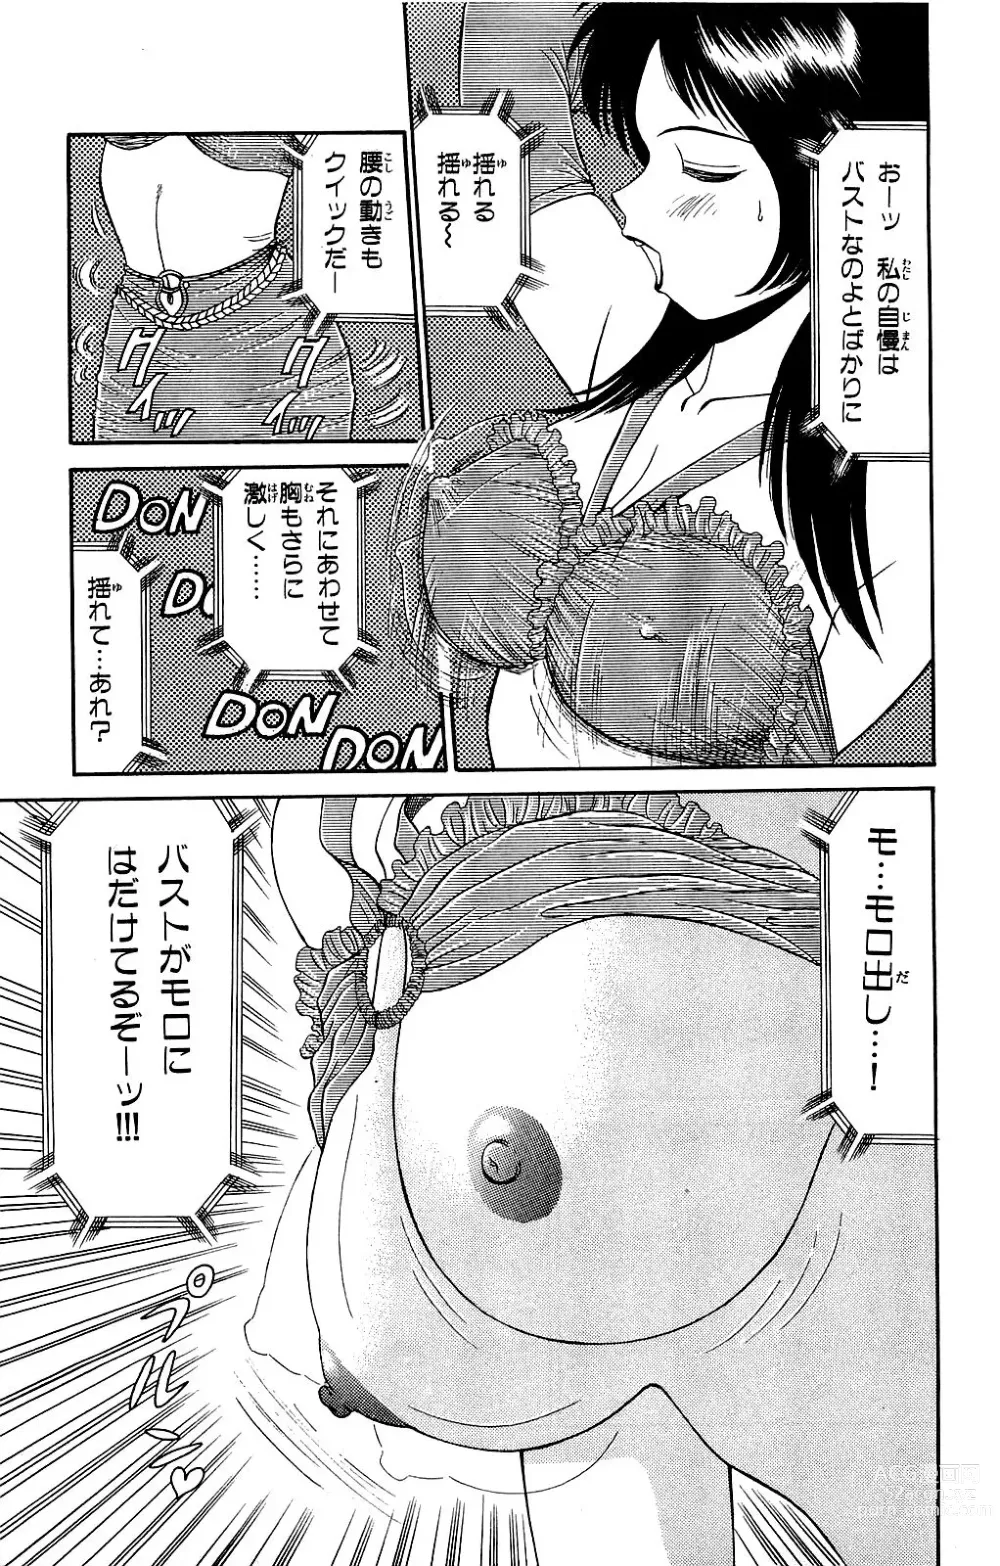 Page 23 of manga Orette Piyoritan Vol. 2